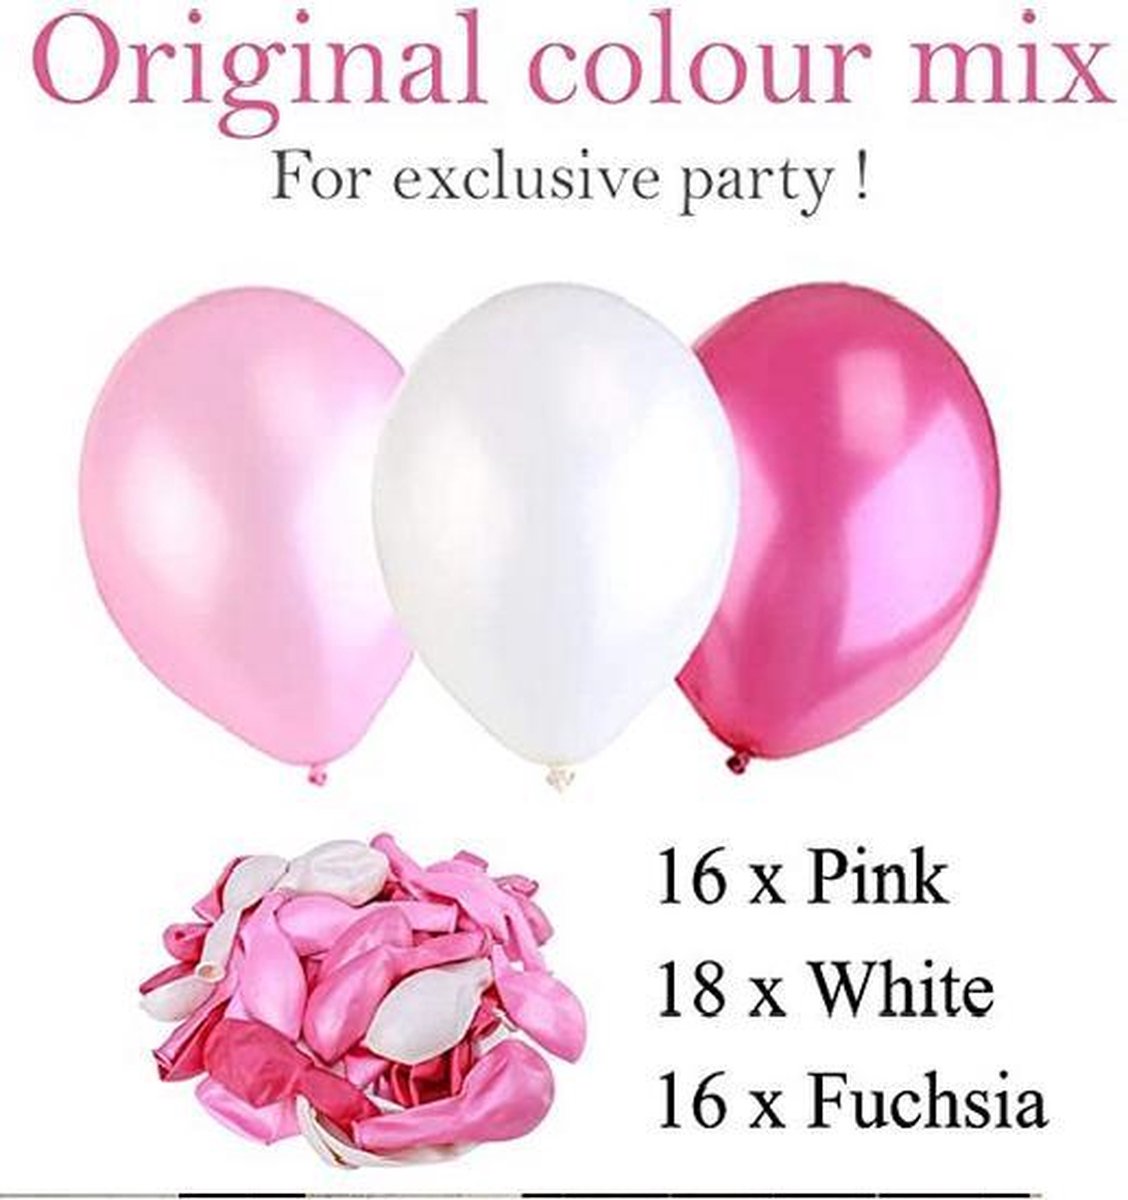 25 ballons premium rose fuchsia  ballon de baudruche de qualité